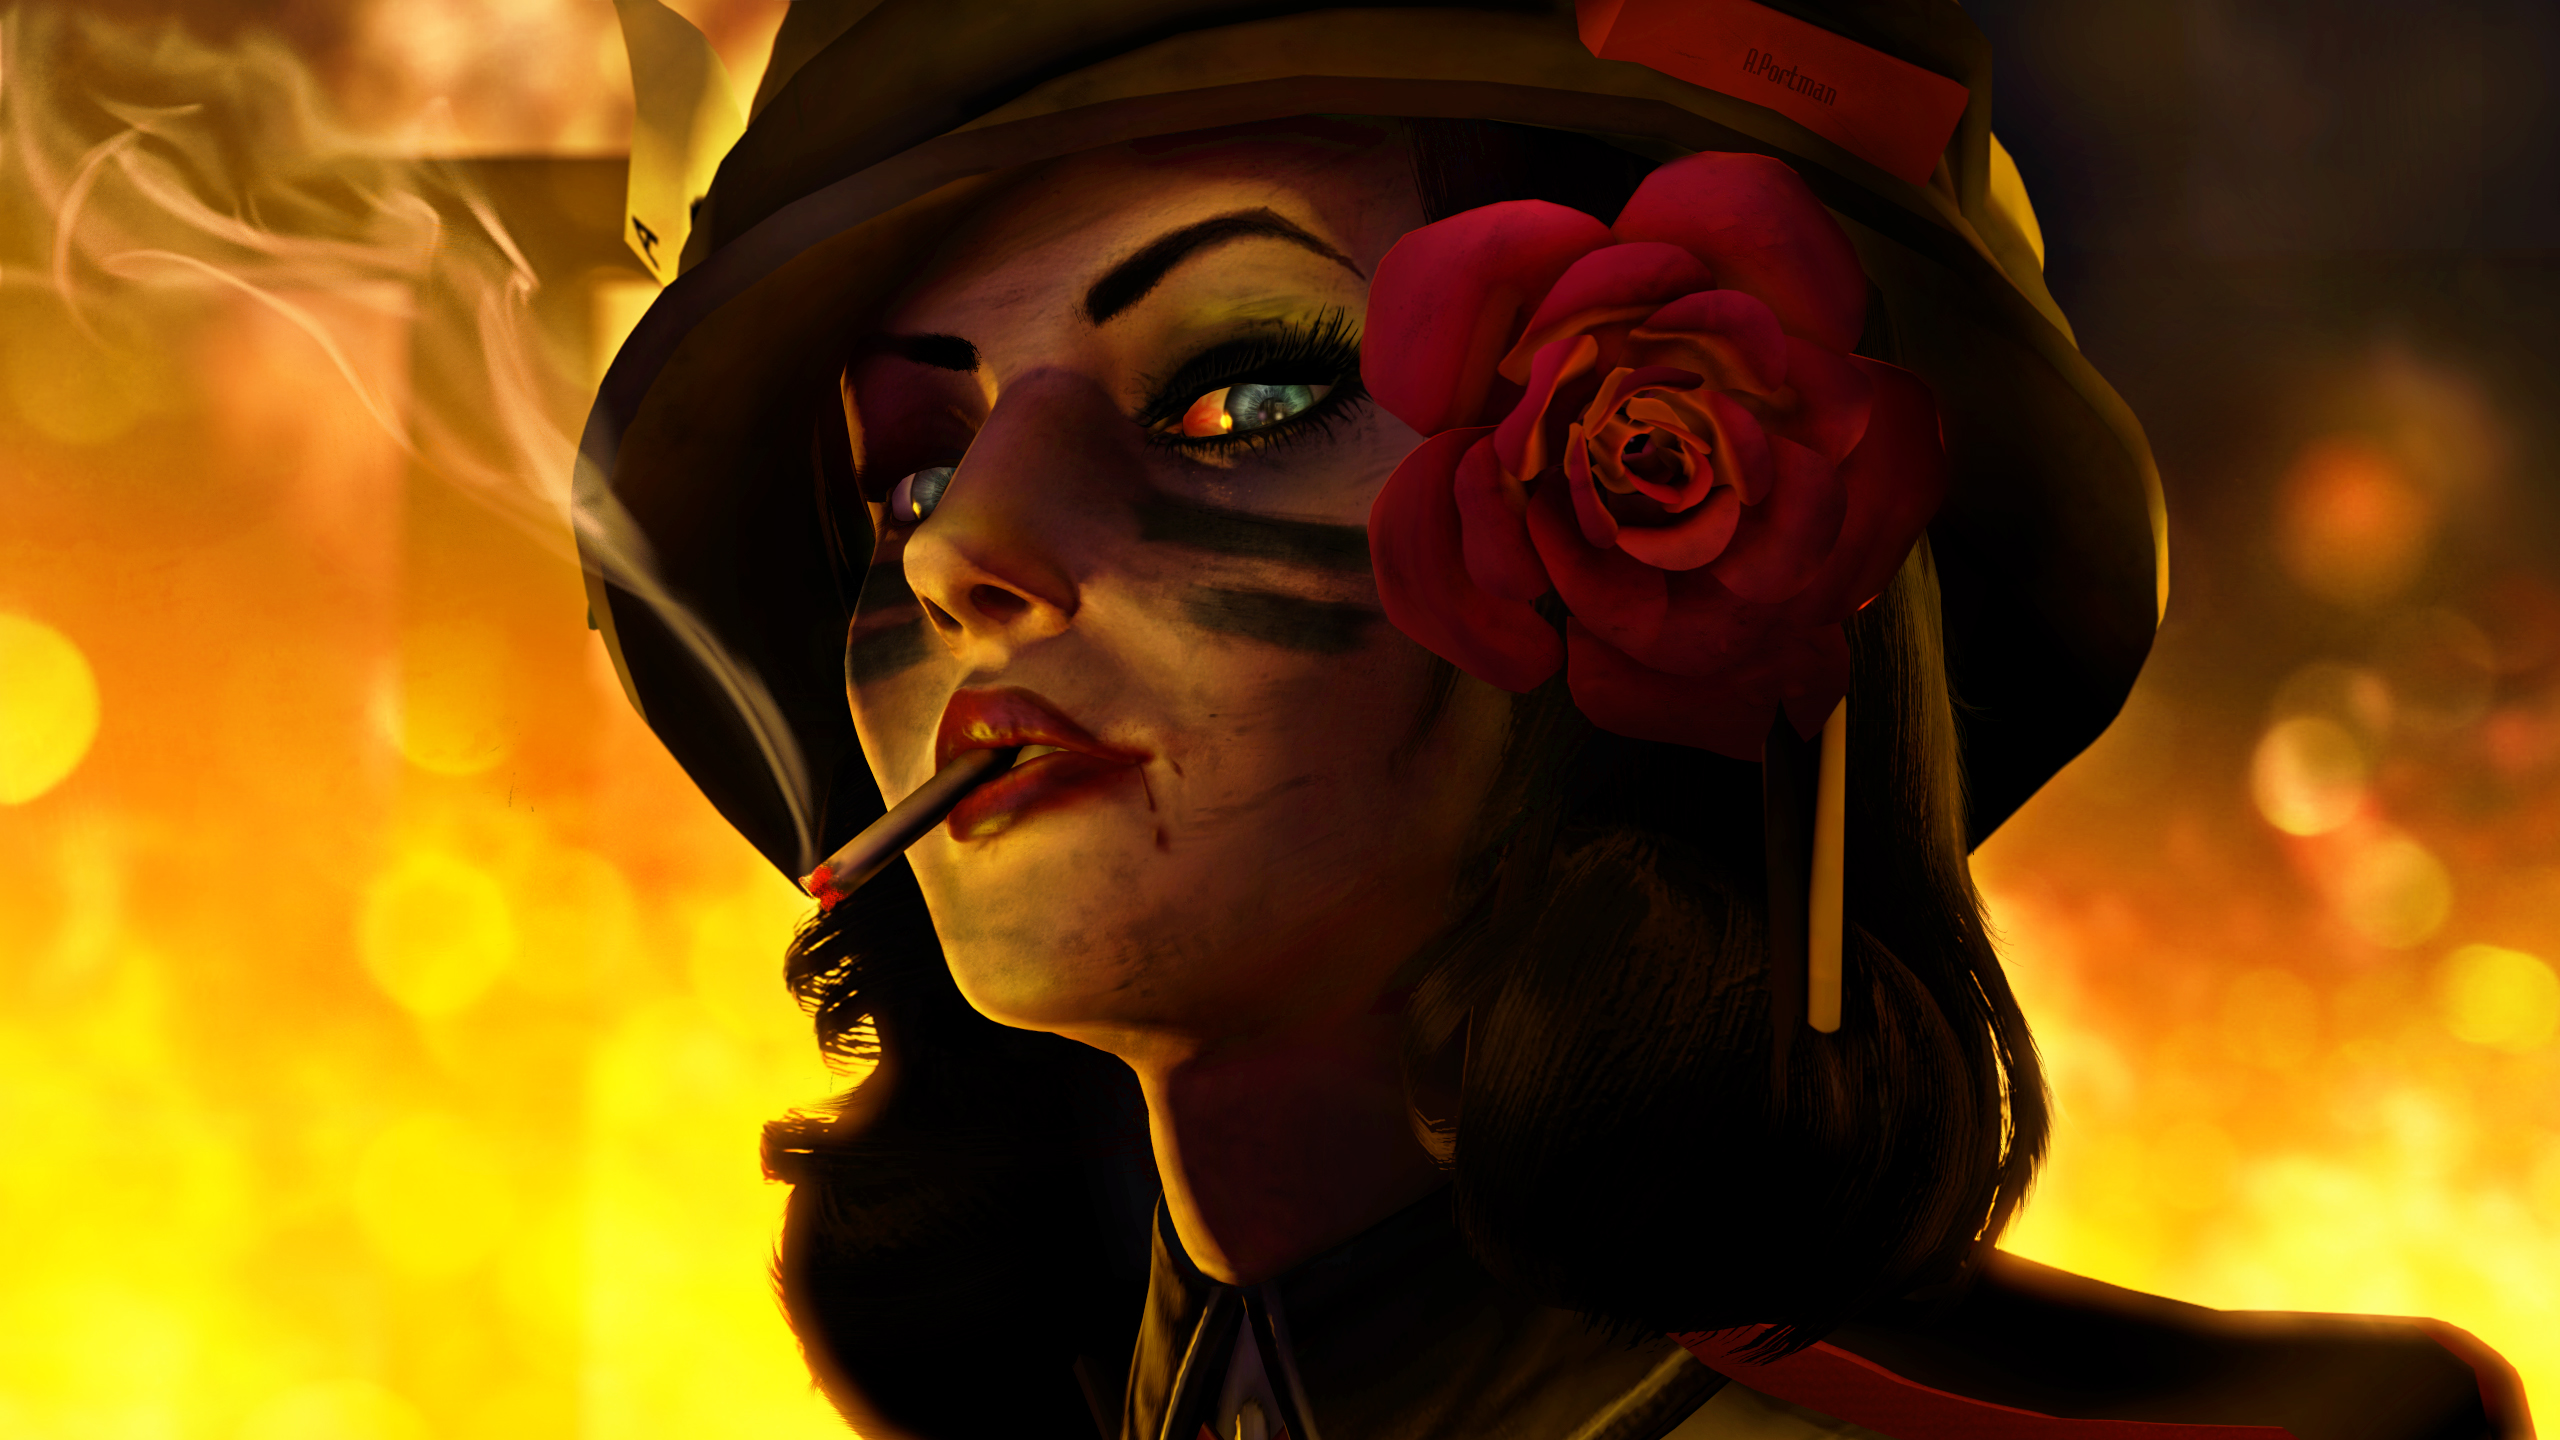 Artistic Cigarette Elizabeth Bioshock Infinite Girl Hat Painting Rose Woman 2560x1440